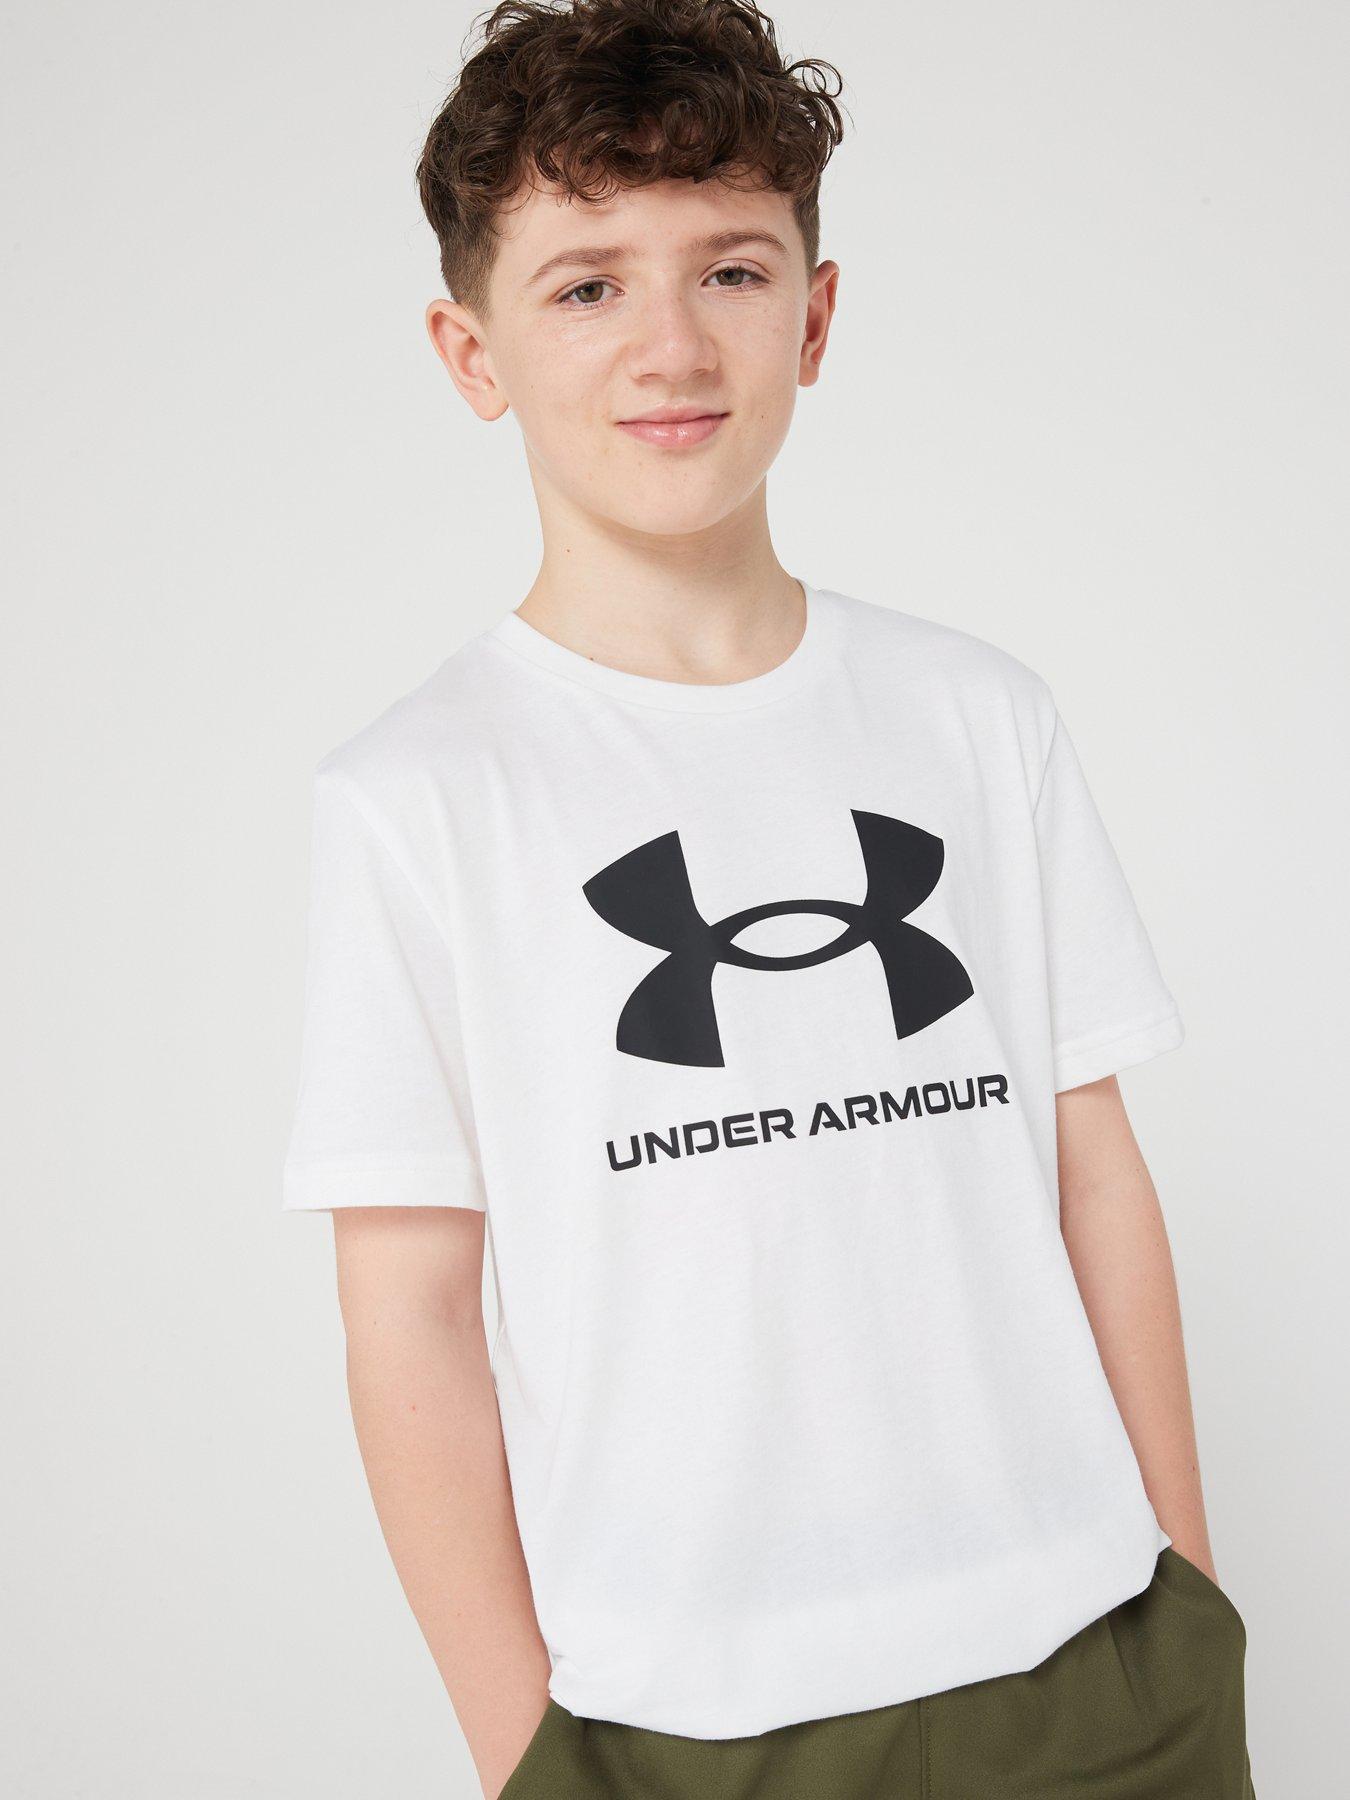 UNDER ARMOUR Kids Sport Style Logo Short Sleeve T-Shirt - White